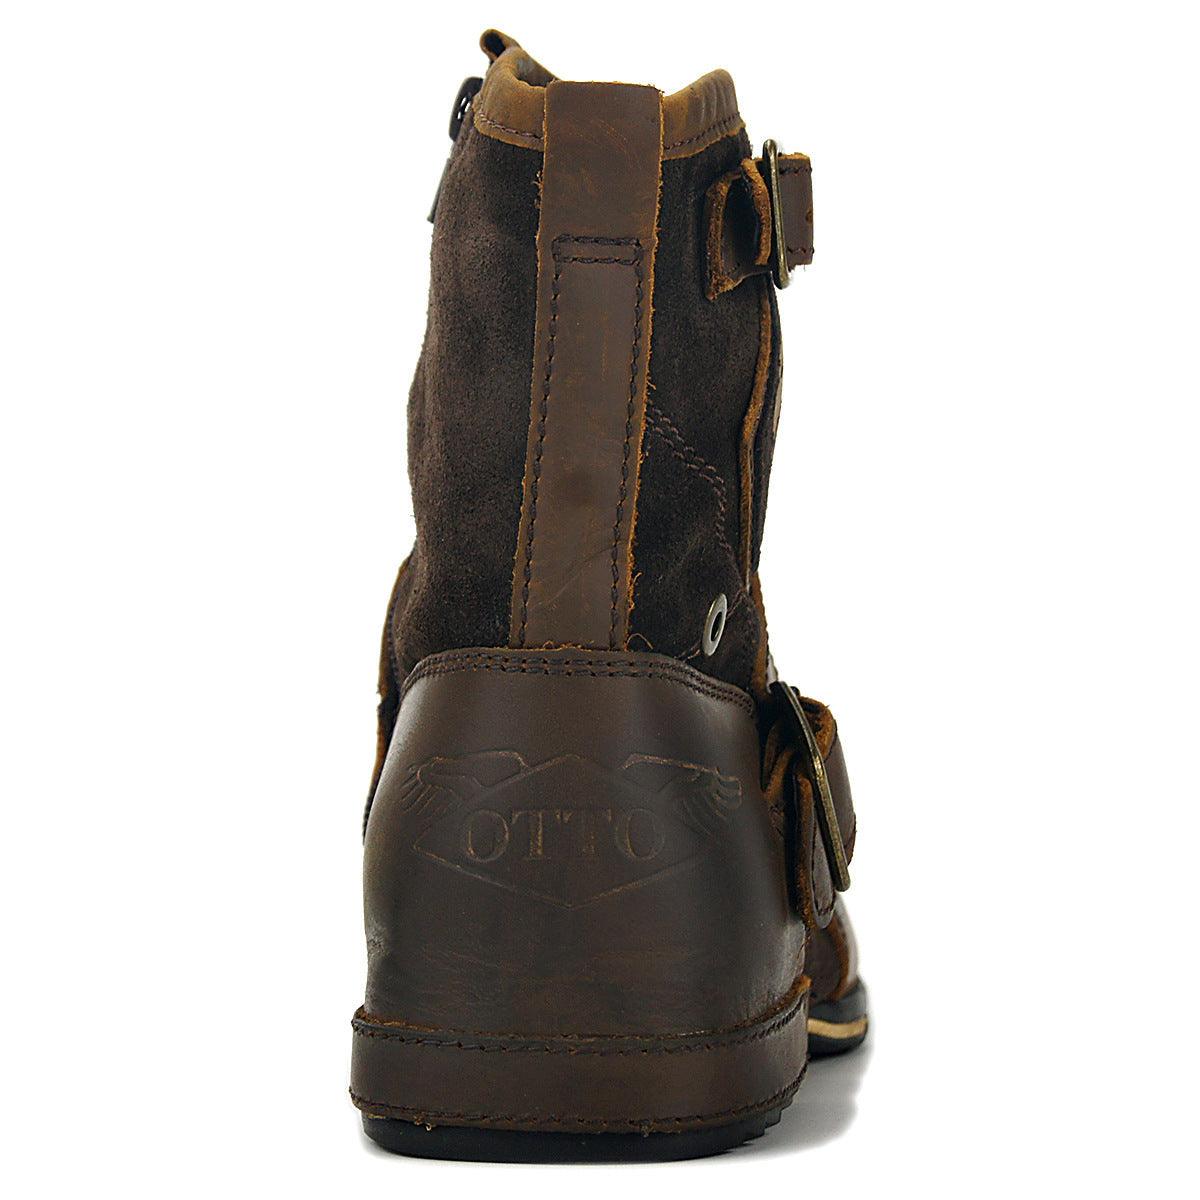 Leather Martin boots - ItemBear.com